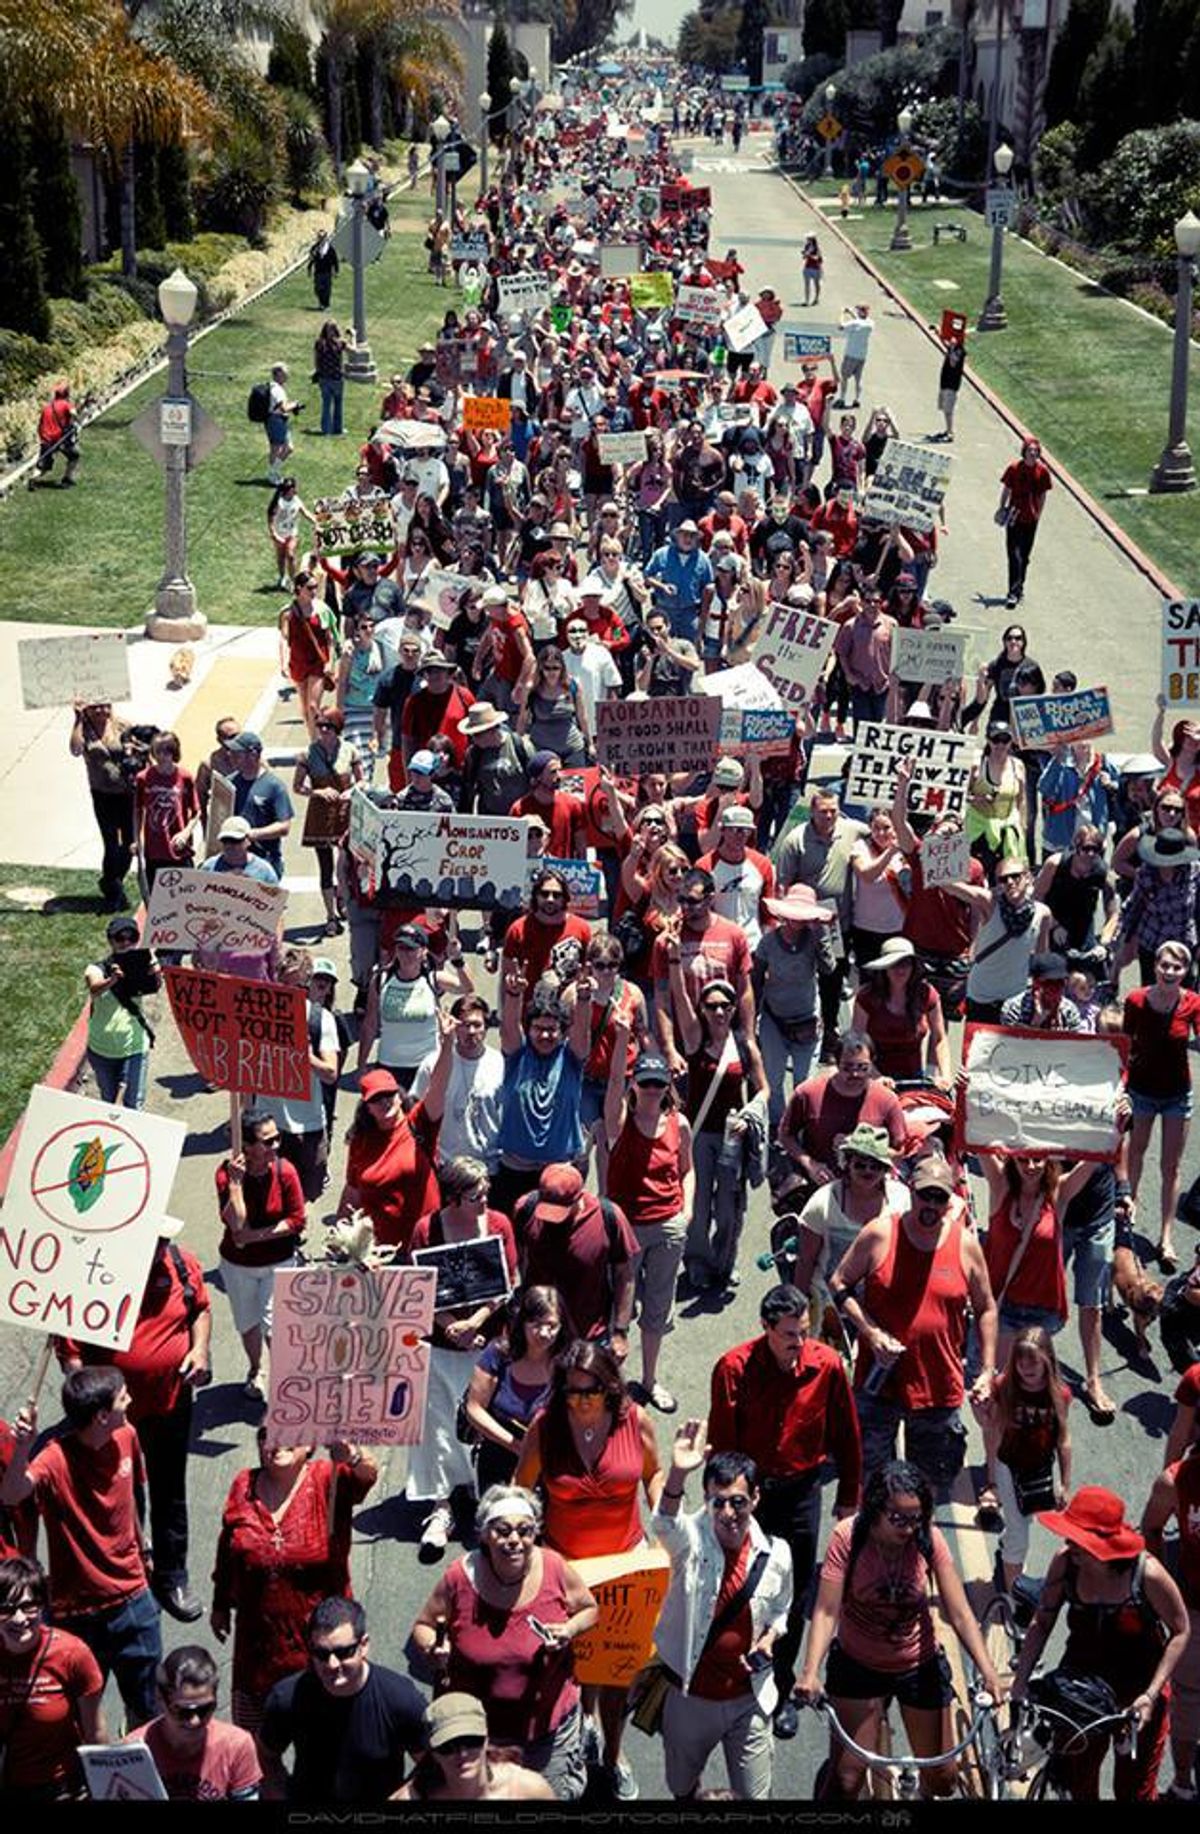  March against Monsanto in San Diego (via Facebook)